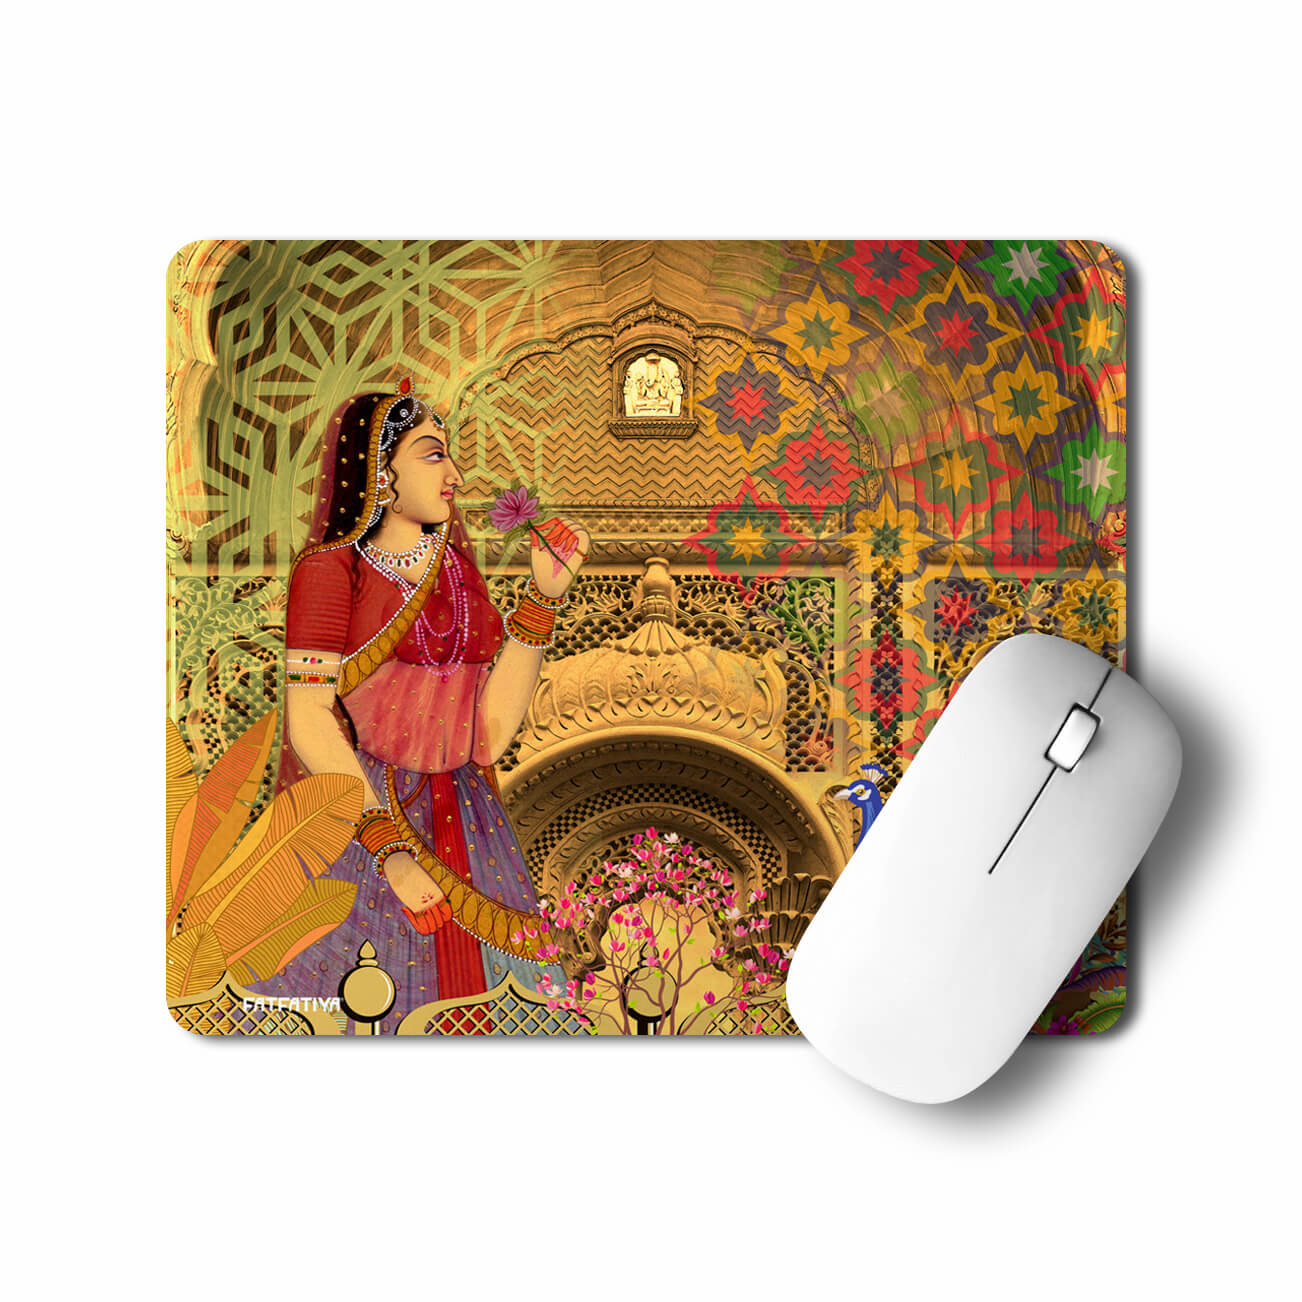 Rajasthani Queen Artisan Gaming Mouse Pad